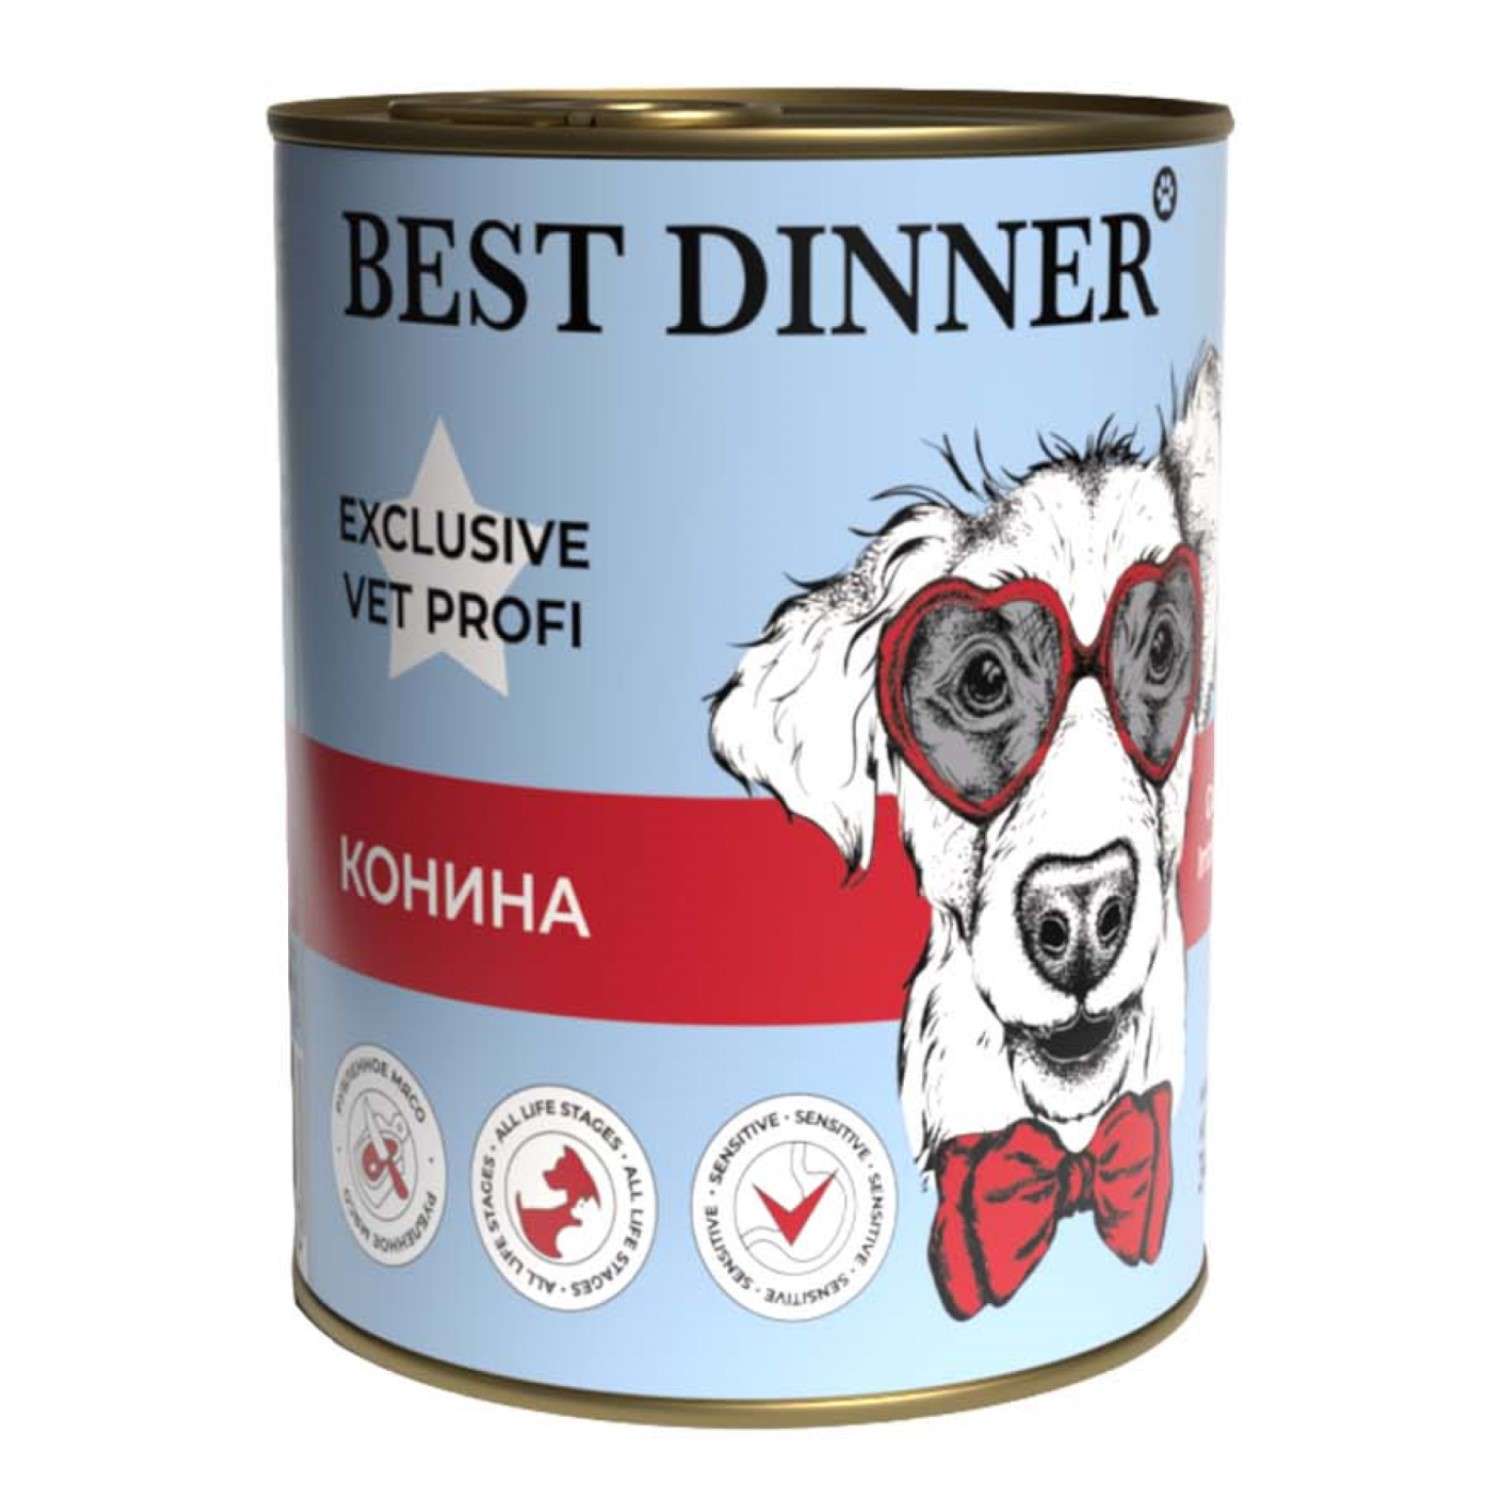 Корм для собак Best Dinner 0.34кг Exclusive Vet Profi Gastro Intestinal конина - фото 1